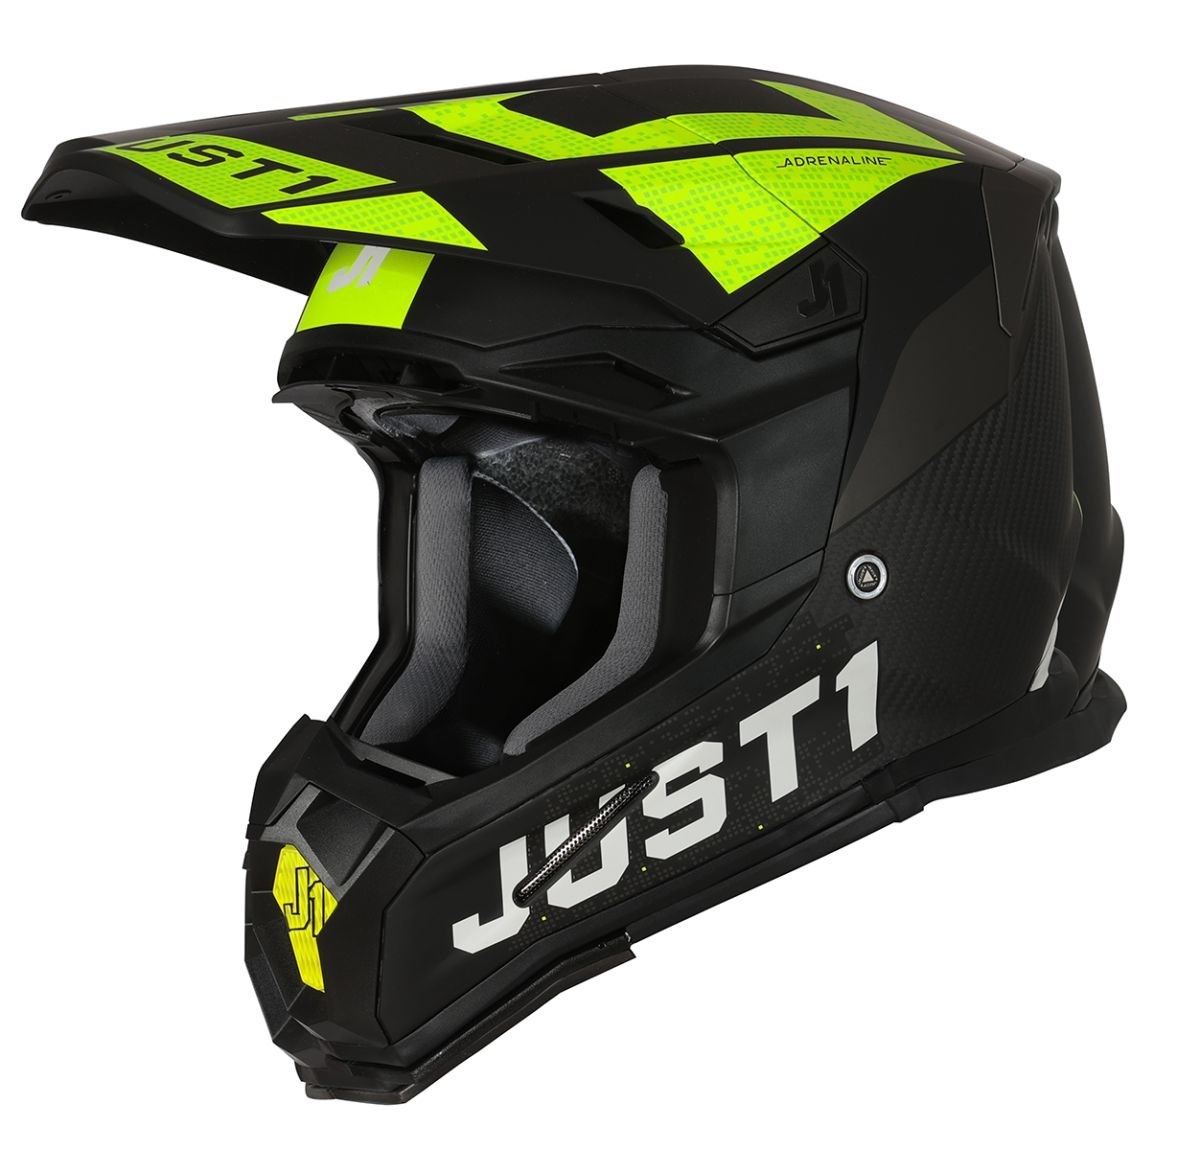 Image of Just1 Helmet J-22 Adrenaline Schwarz Gelb Fluo Carbon Matt Crosshelm Größe M